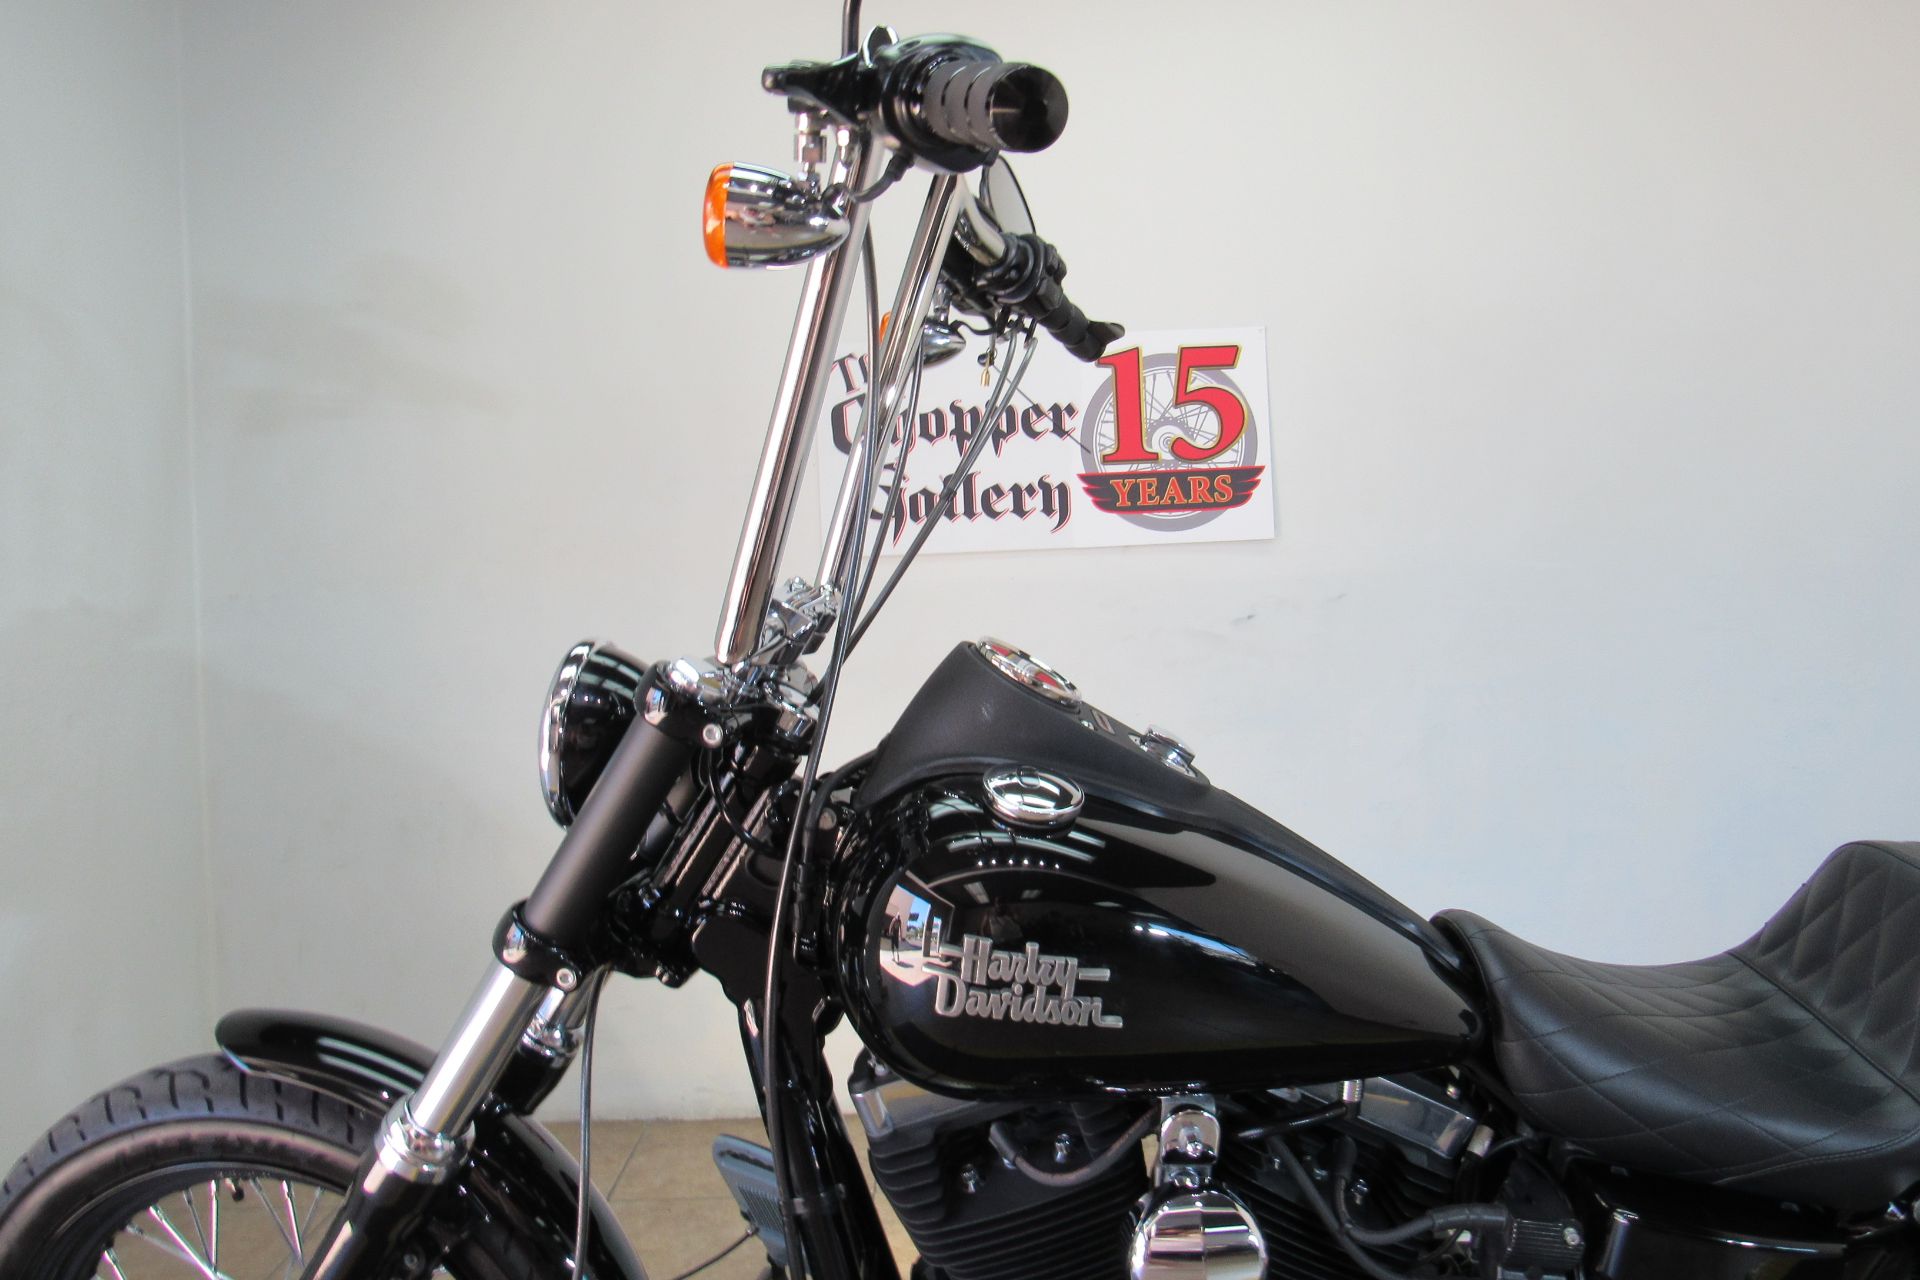 2016 Harley-Davidson Street Bob® in Temecula, California - Photo 13